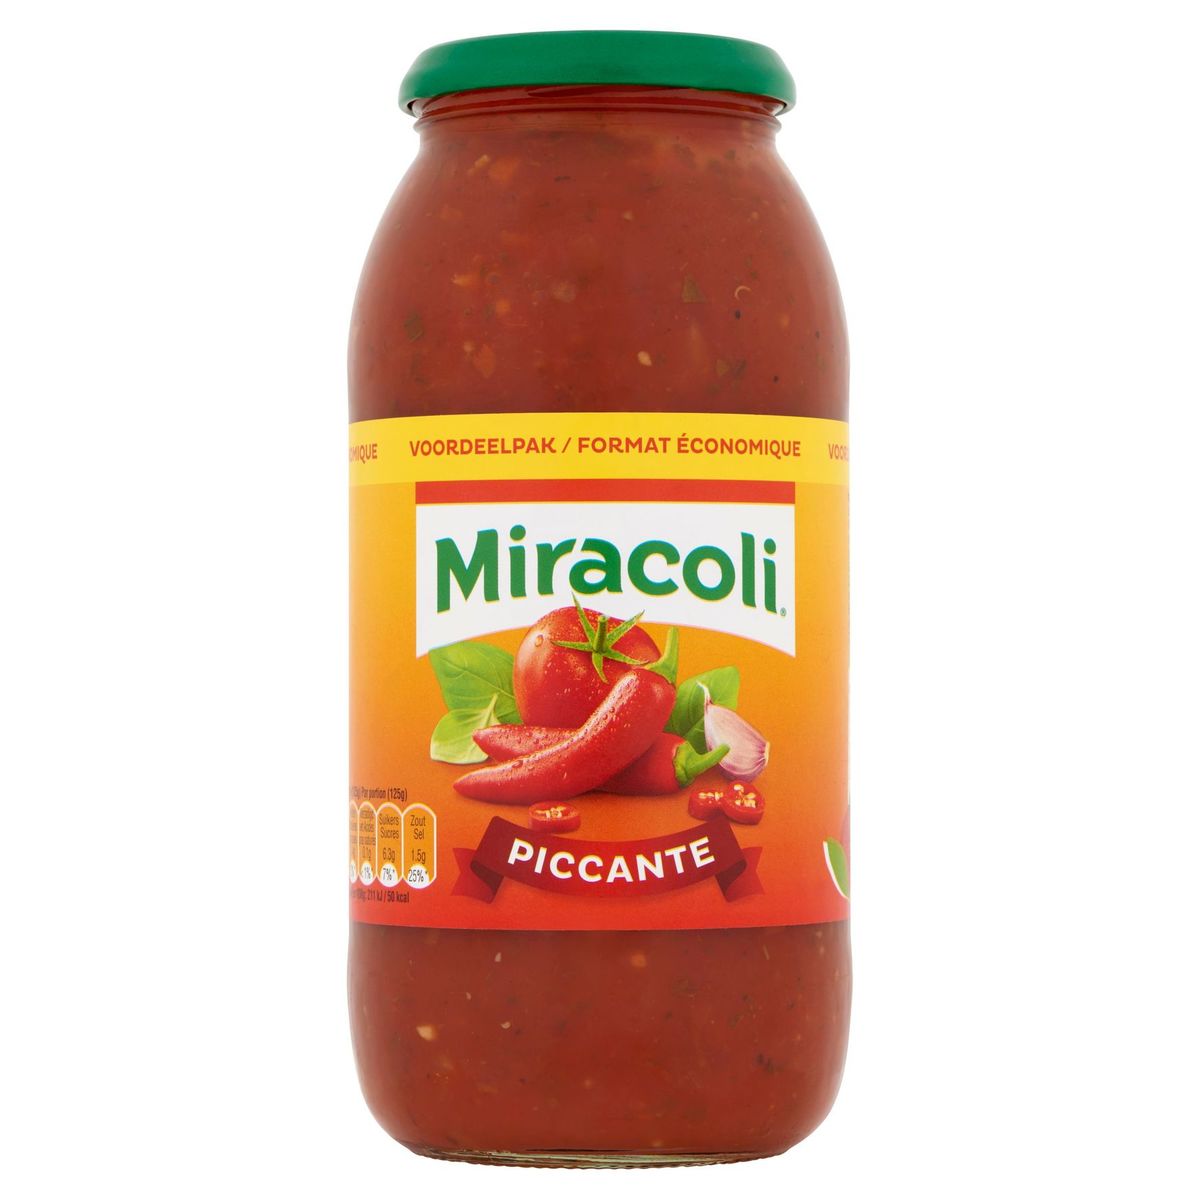 Miracoli Sauce Piccante 750 g